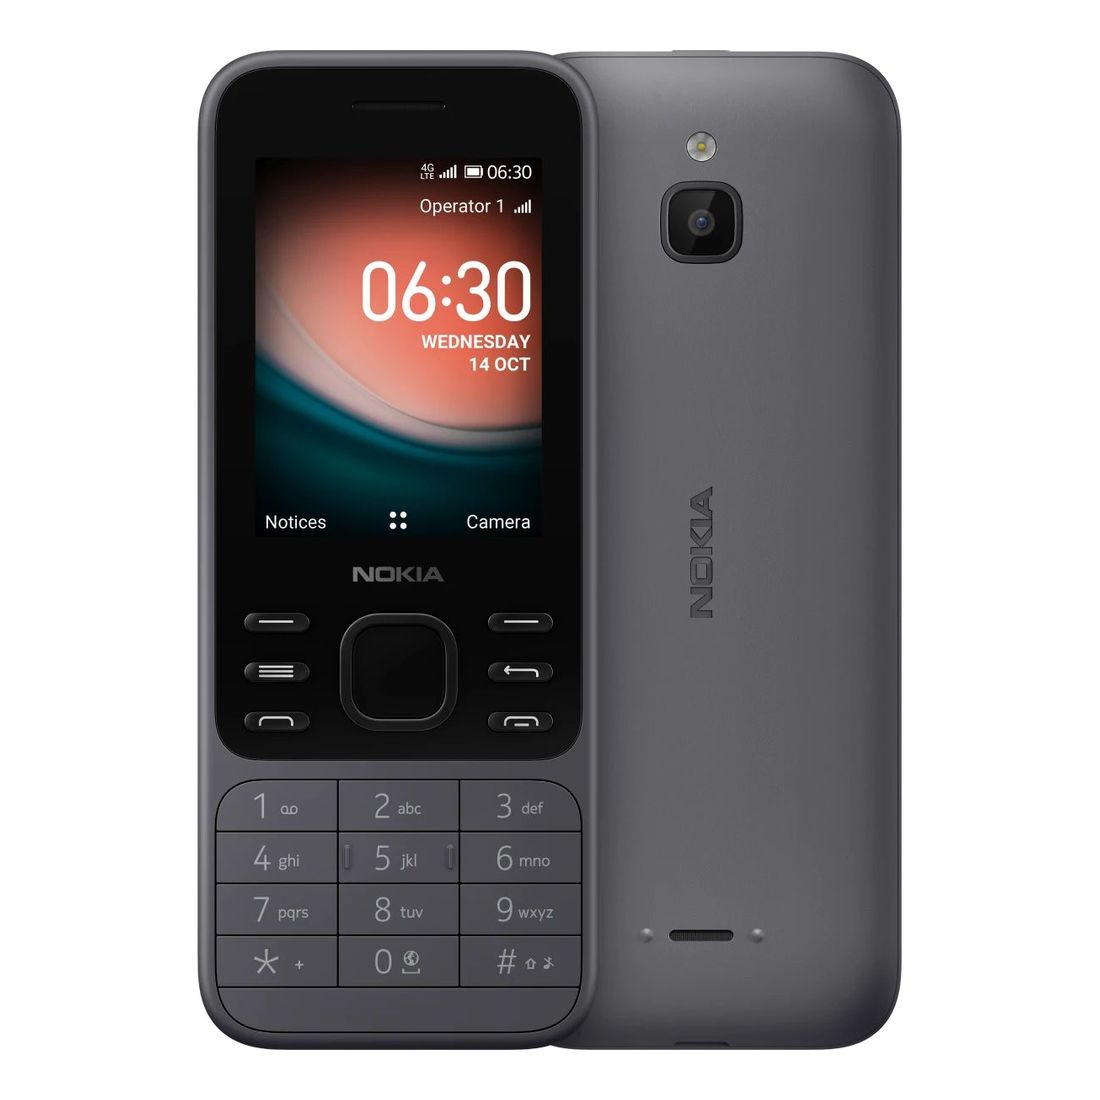 Nokia 6300 4G TA-1287 Mobile Phone 512MB/4GB Charcoal